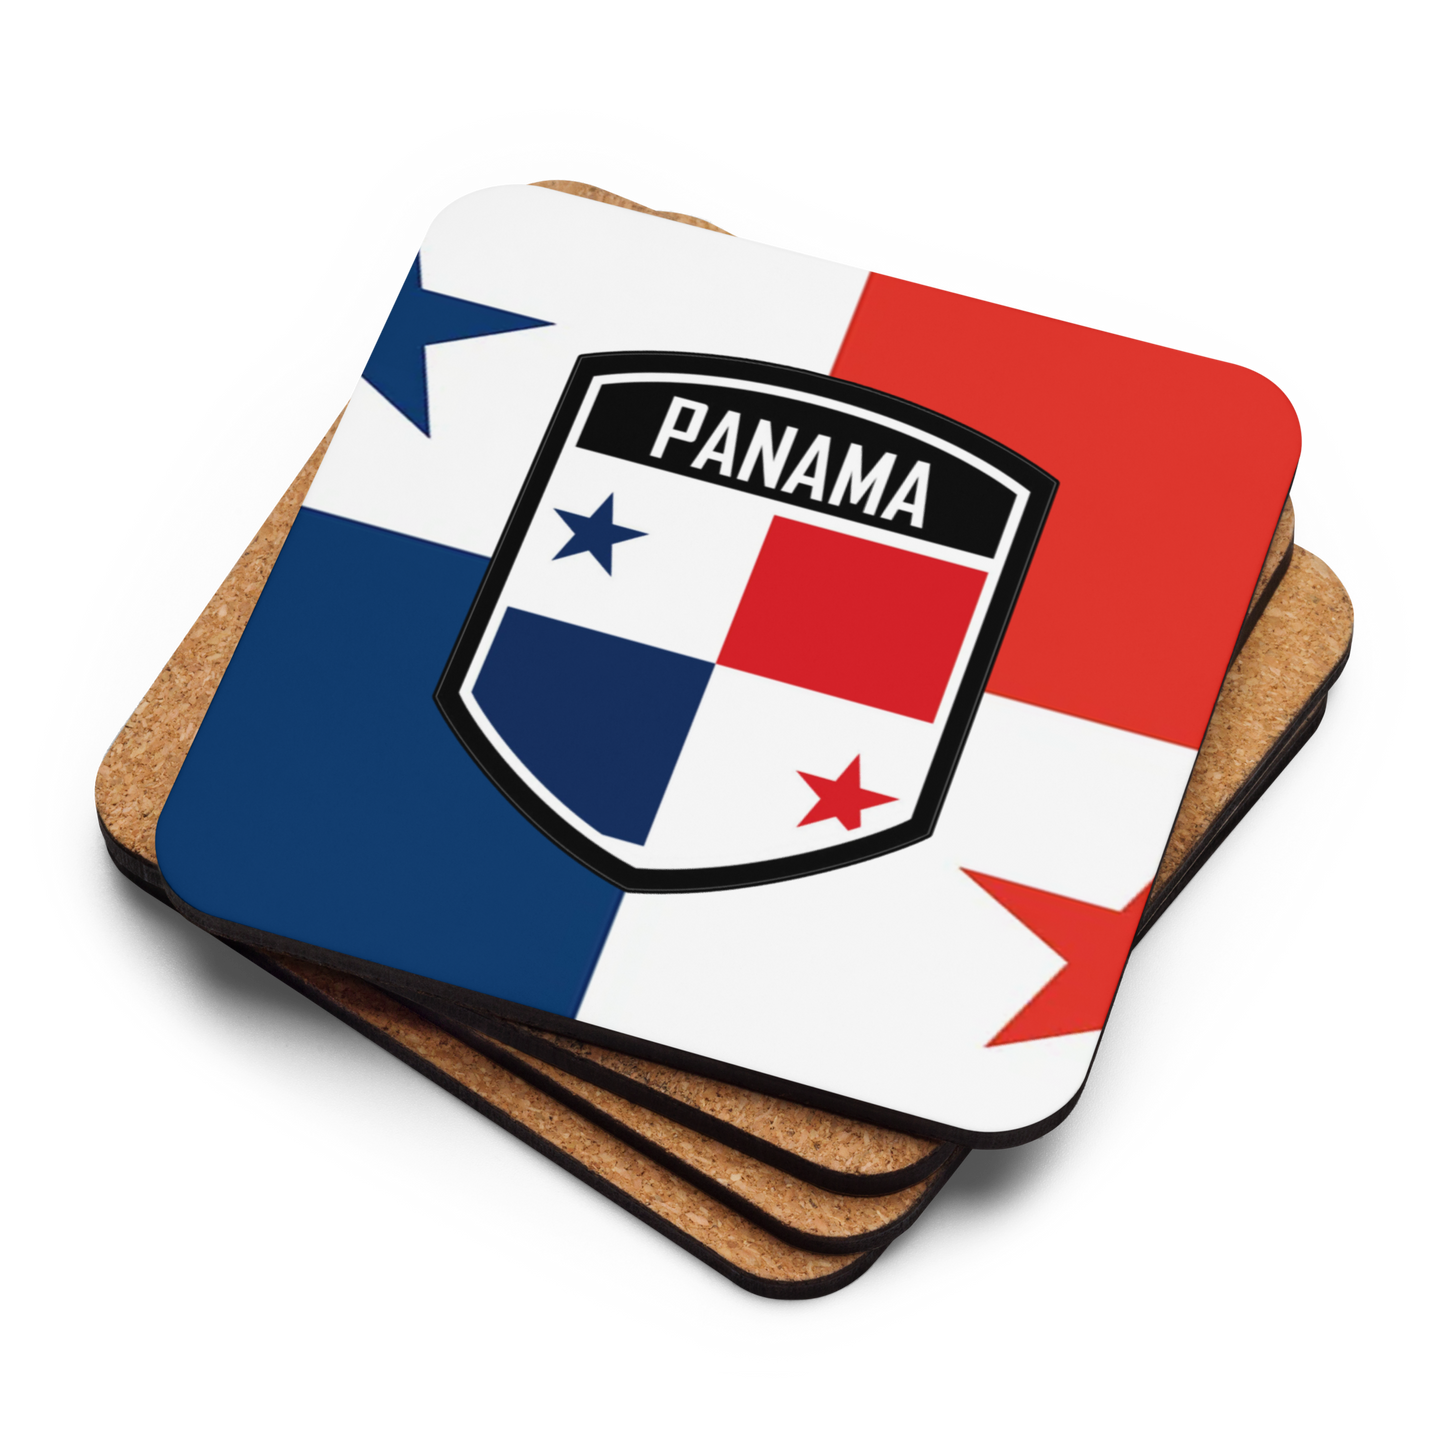 Panama Cork-back coaster